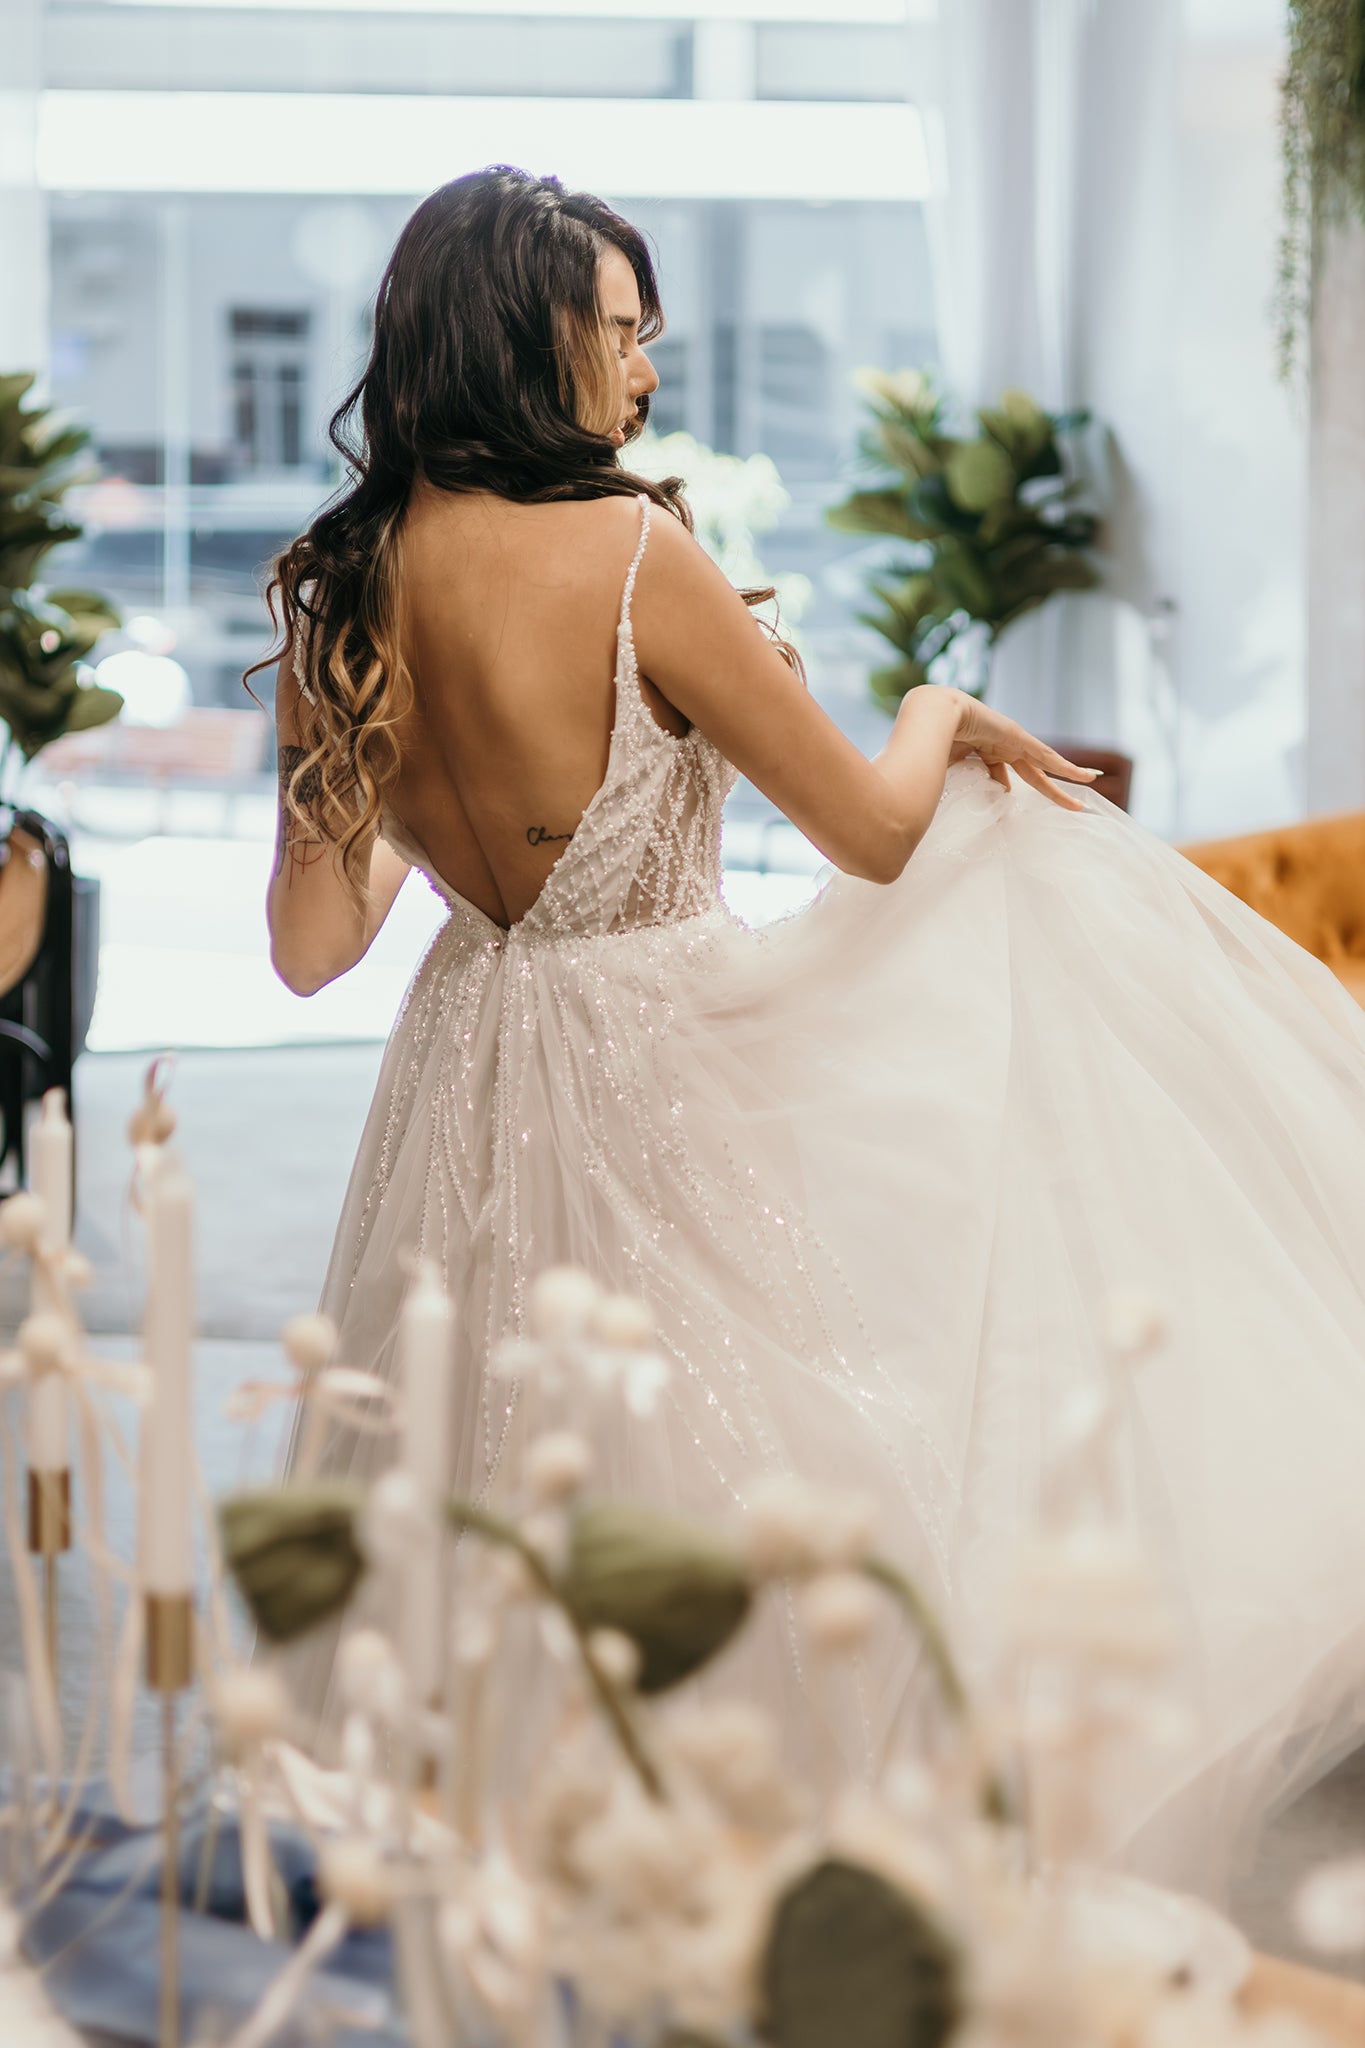 bride fluffing the skirt of her wedding dress